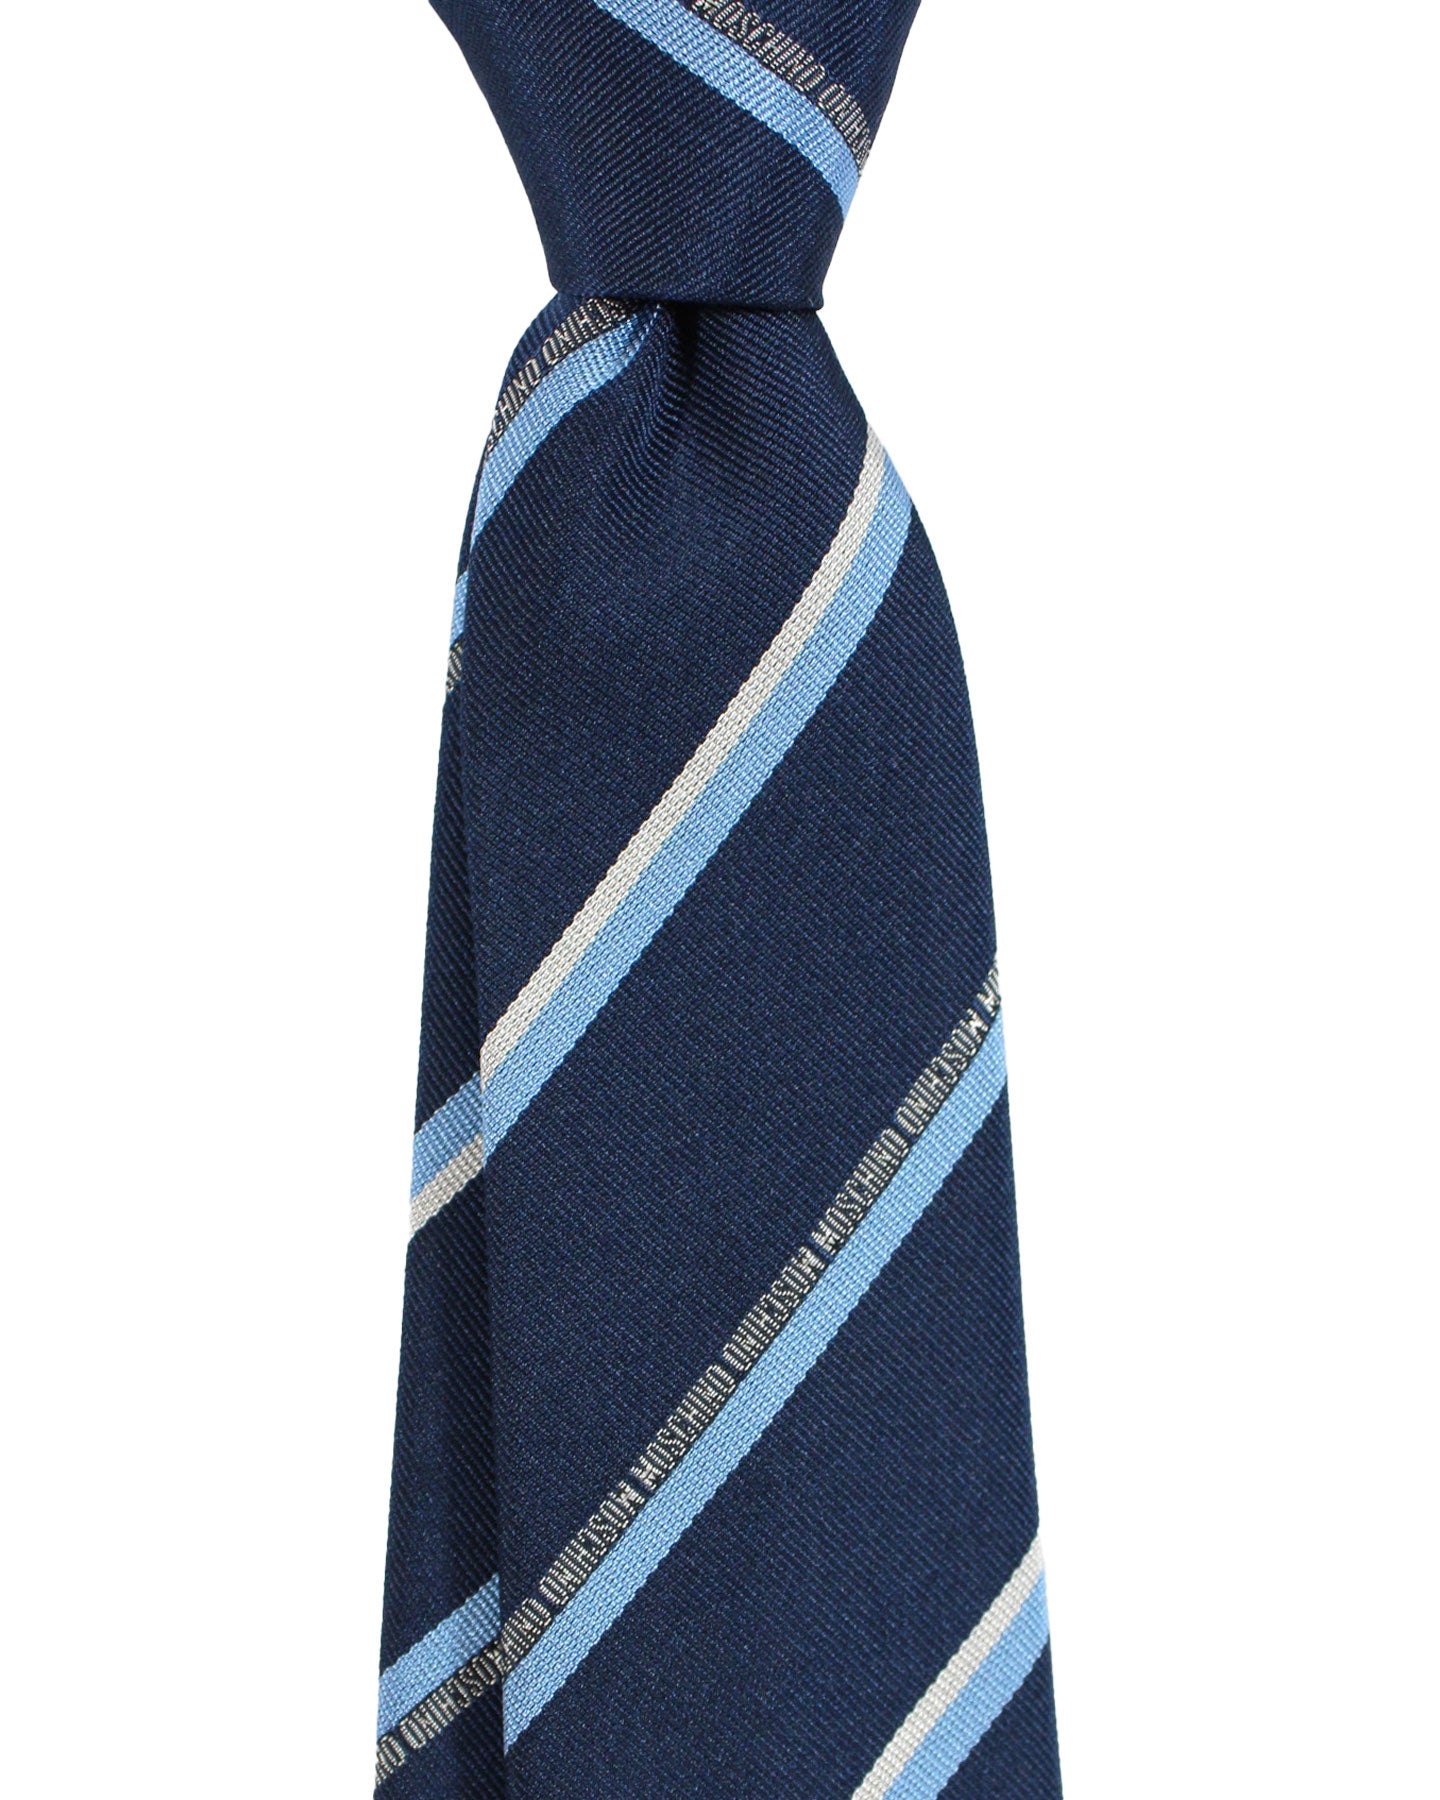 Moschino Tie Navy Blue Logo Stripes Design